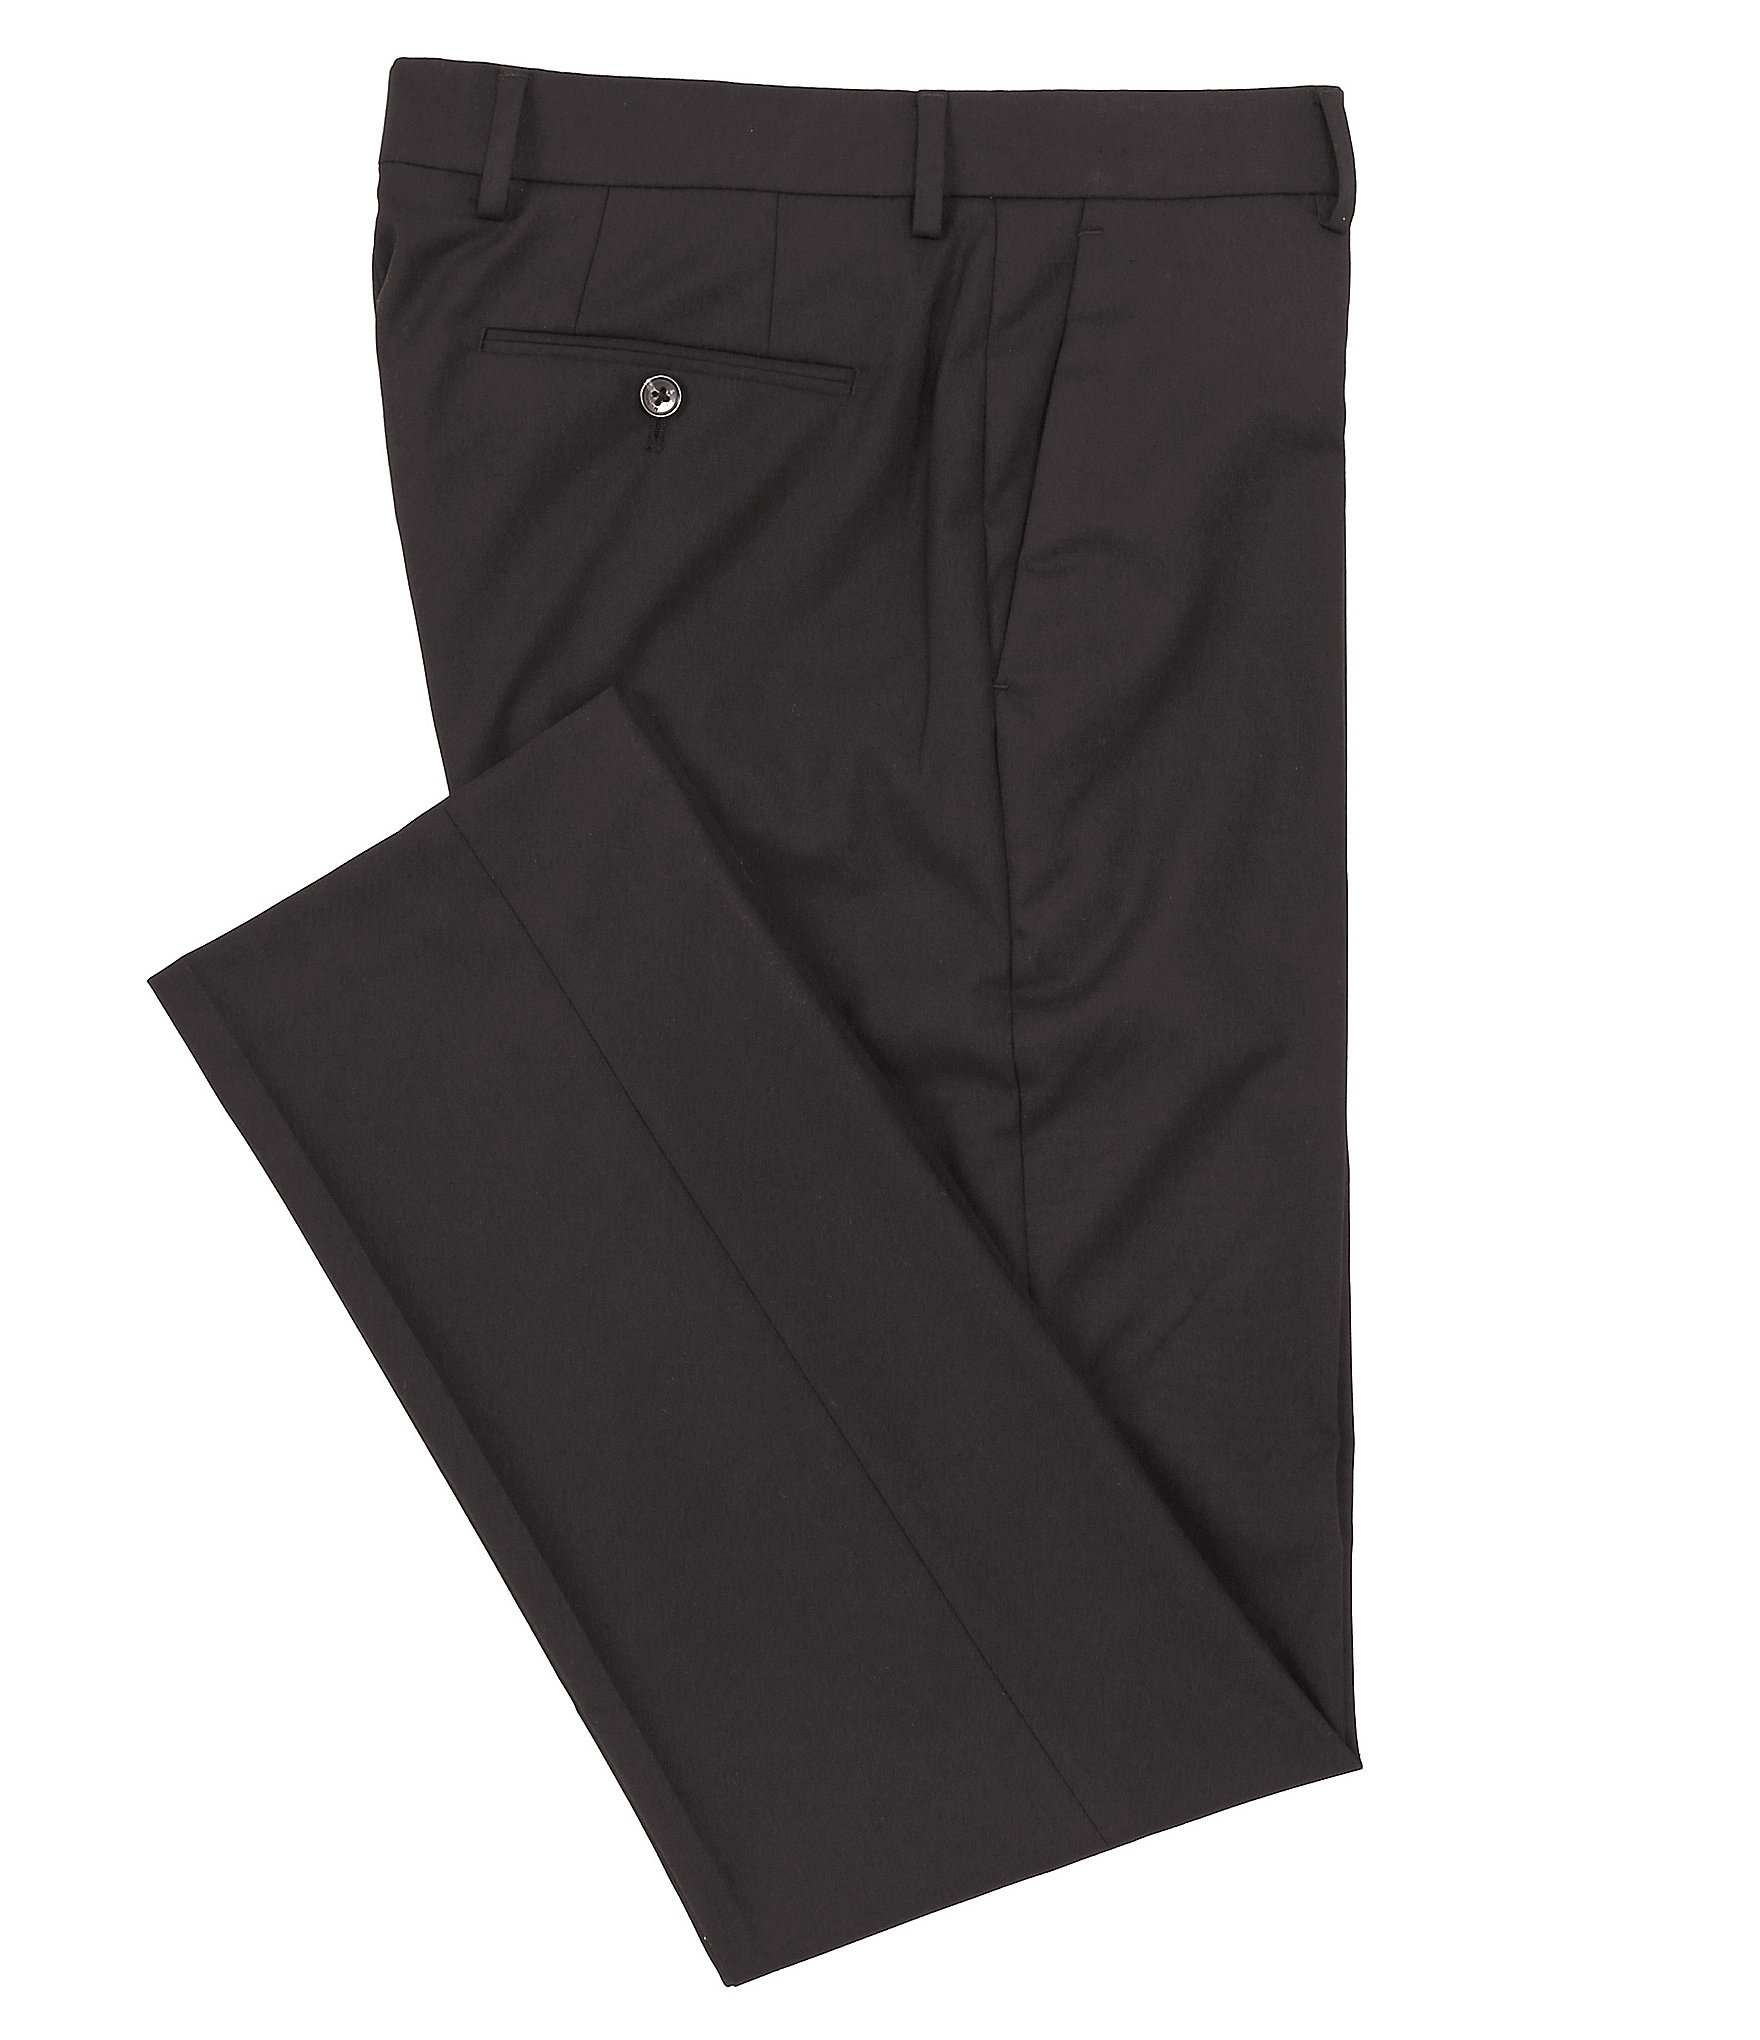 Men's Black Dress Pants Classic Fit Flat Front Easy Care Ultimate Cmfrt NWT $80+ 